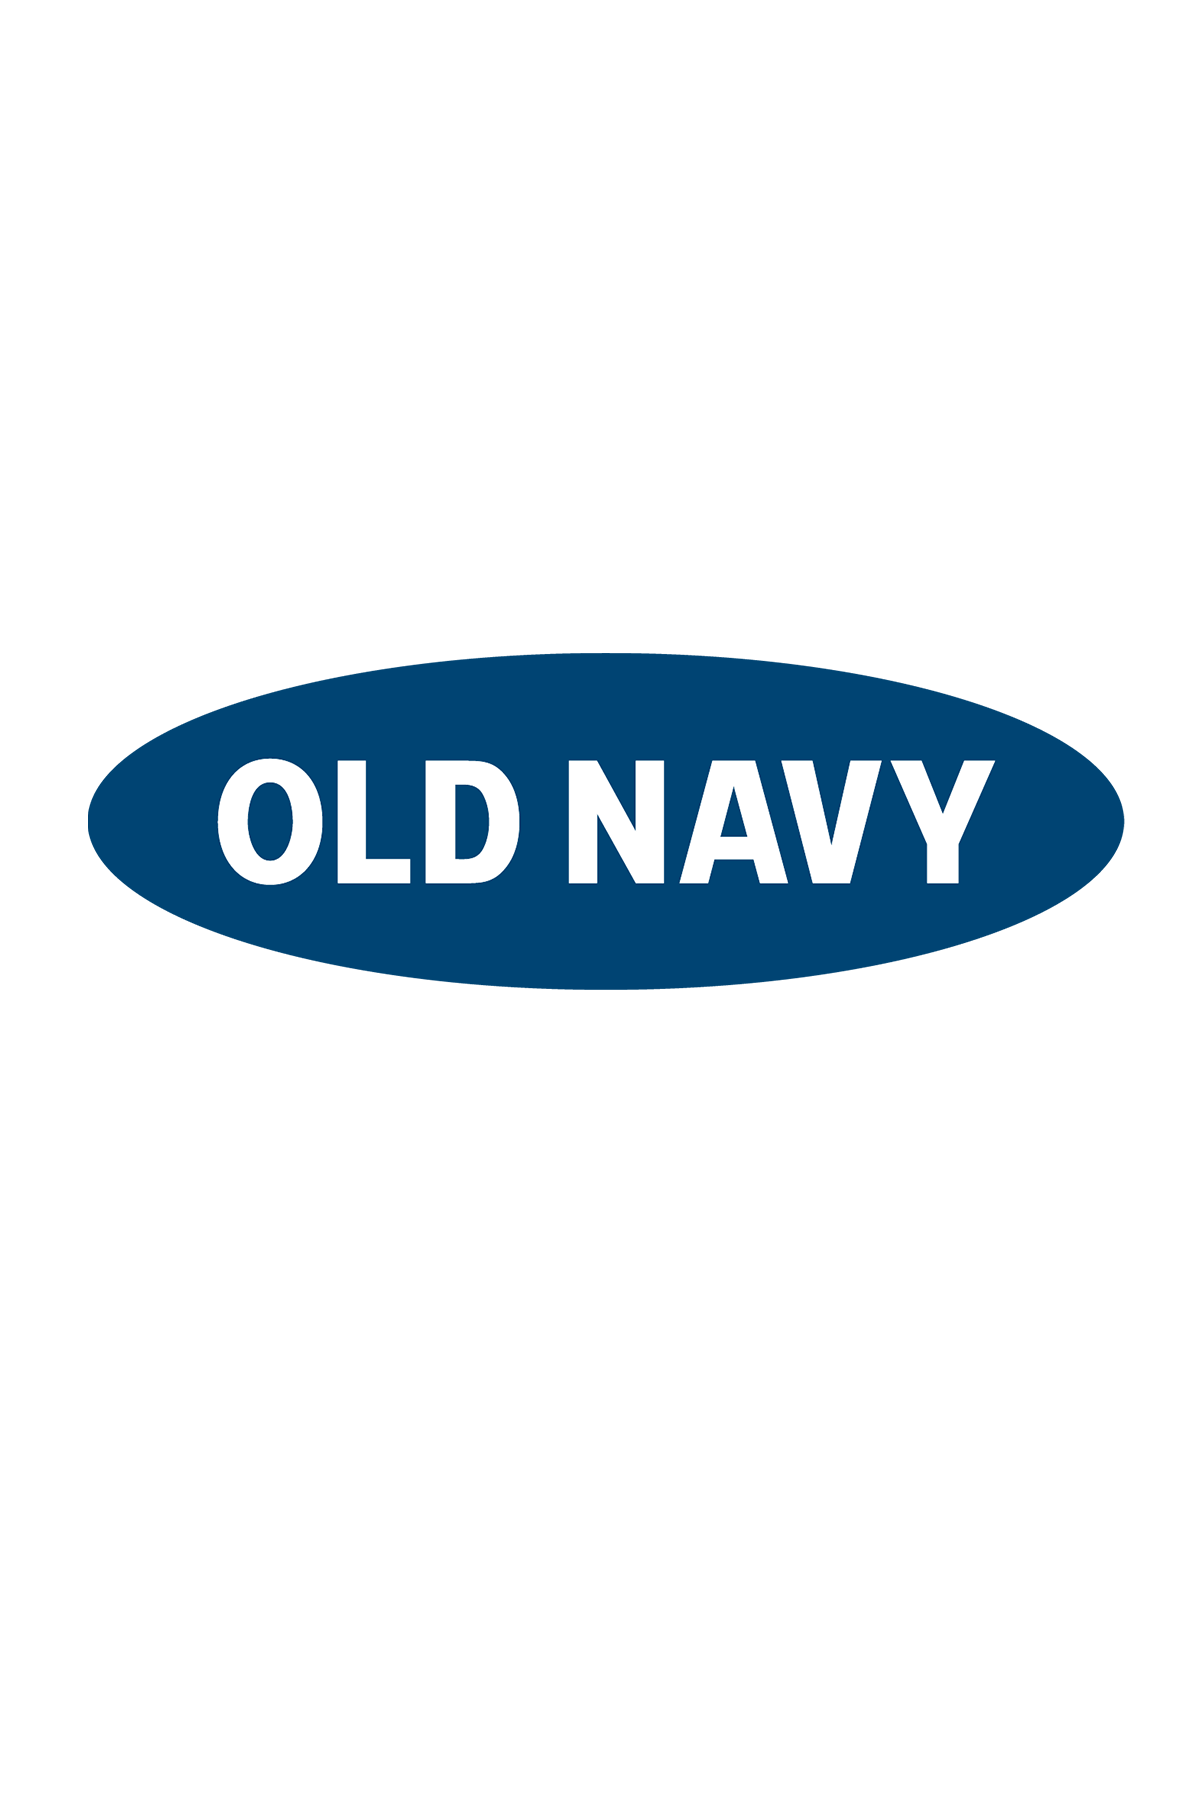 Old Navy logo.